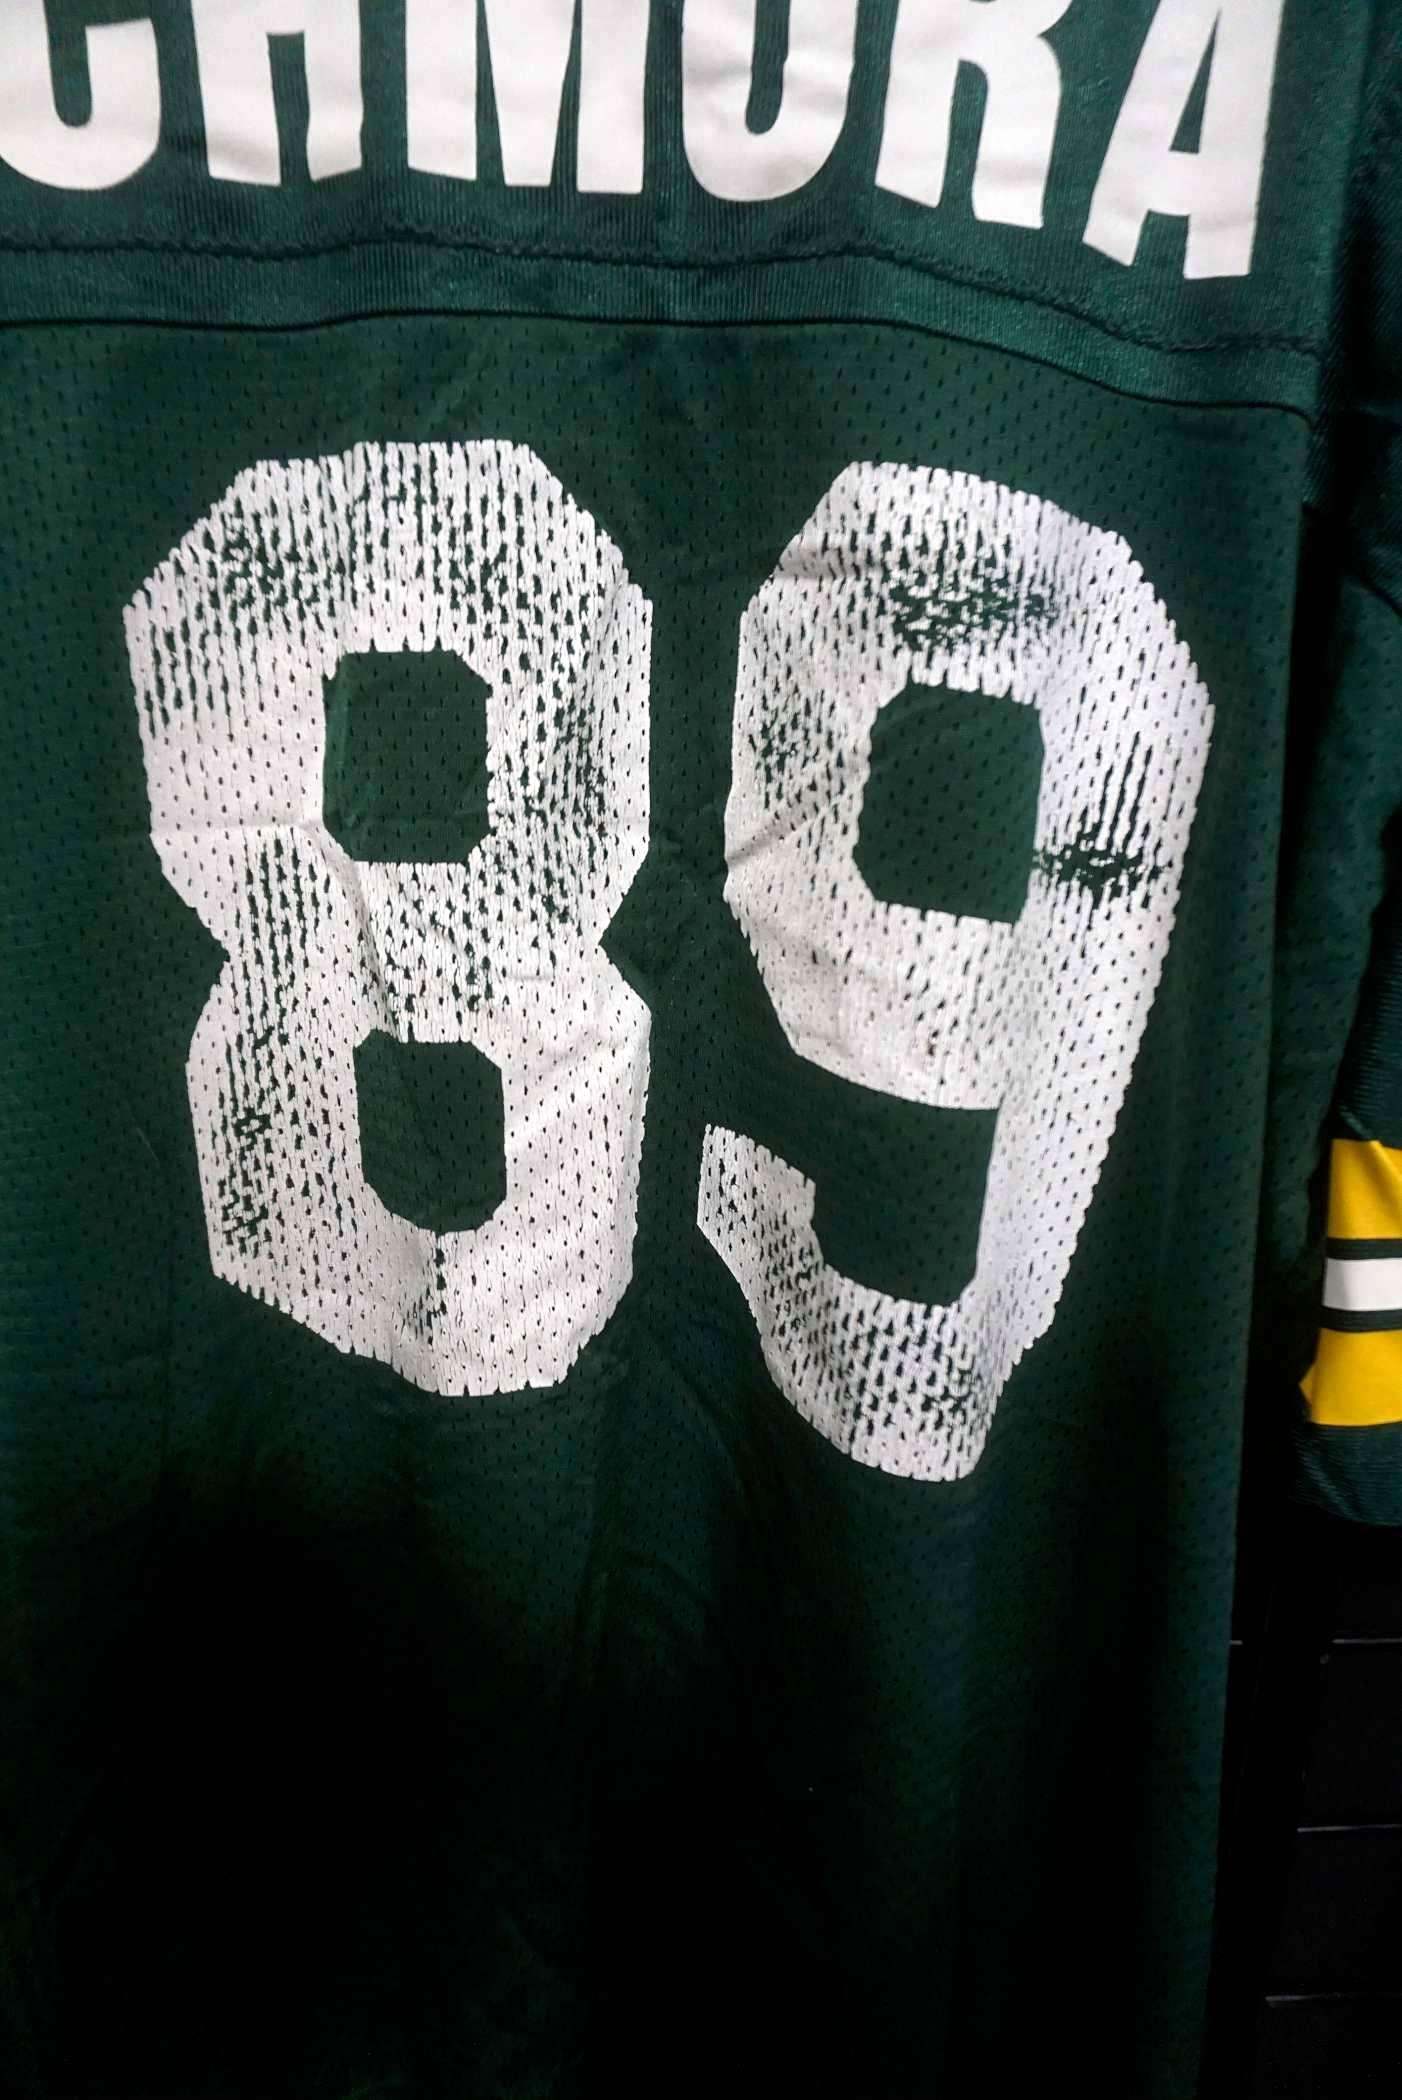 Green Bay Packers Jersey #89 Chmura (Size 52)